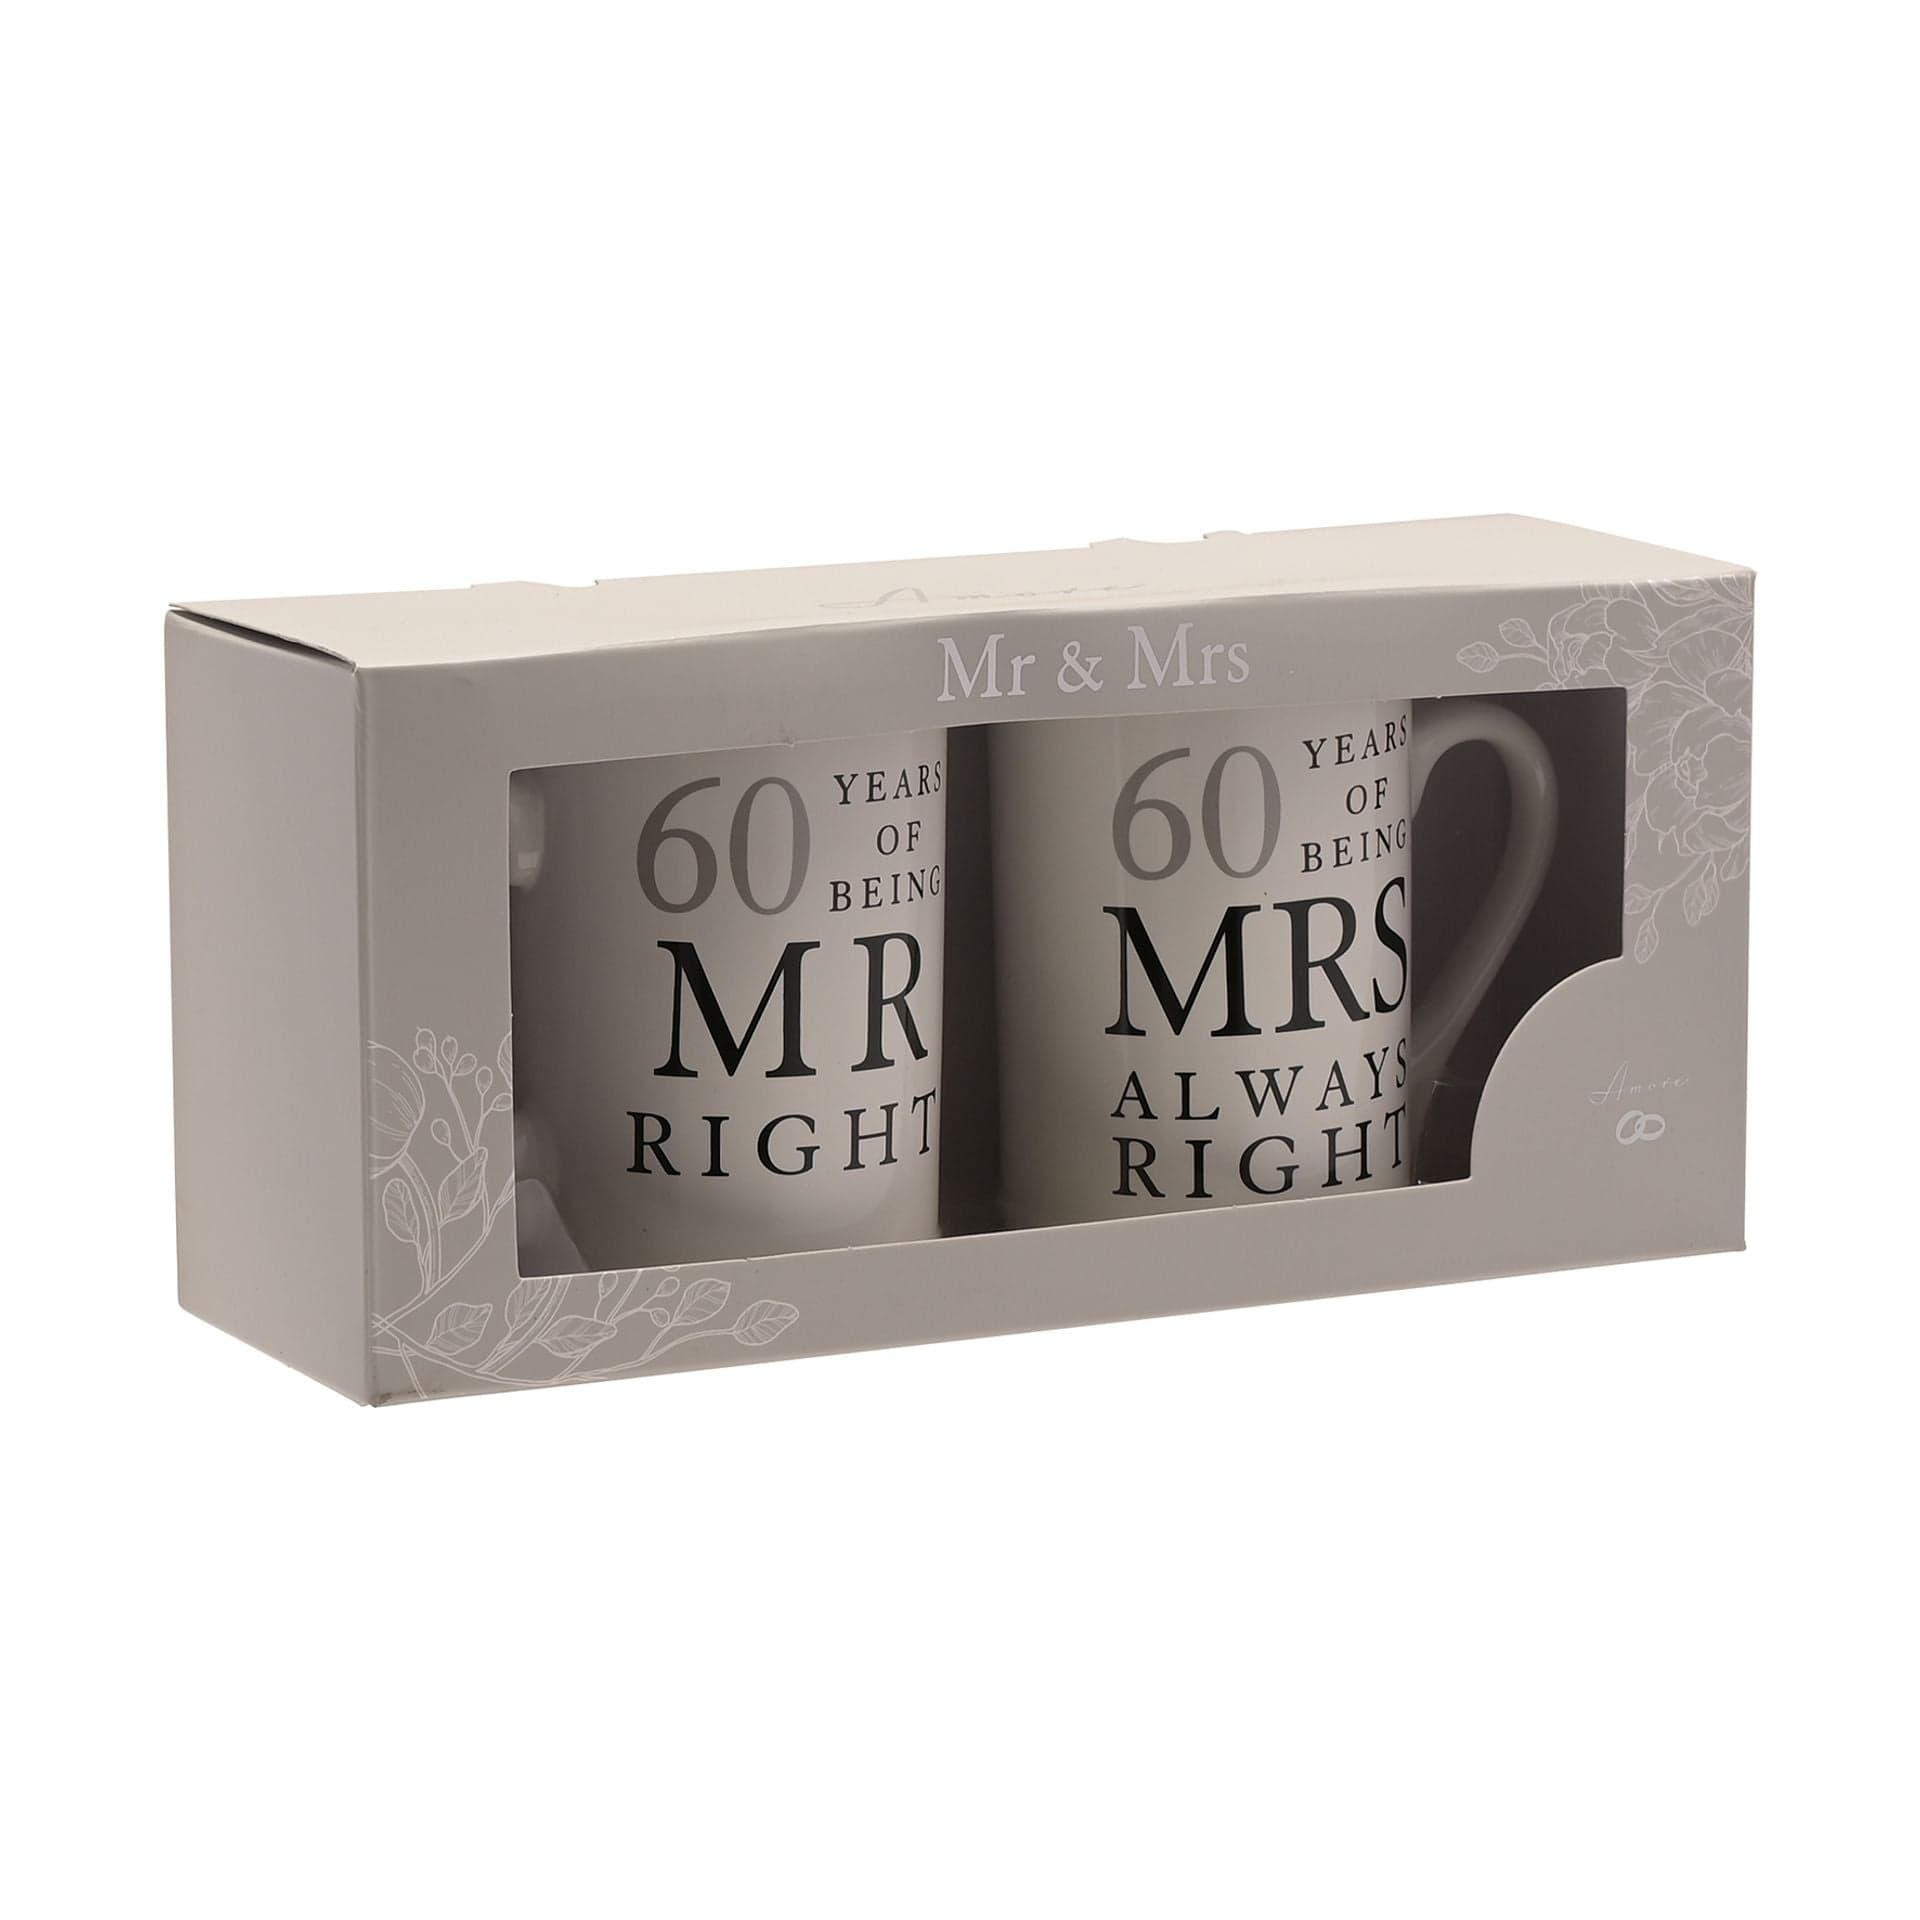 Widdop Mug Amore 60th Anniversary Mug Set - Mr Right Mrs Always Right